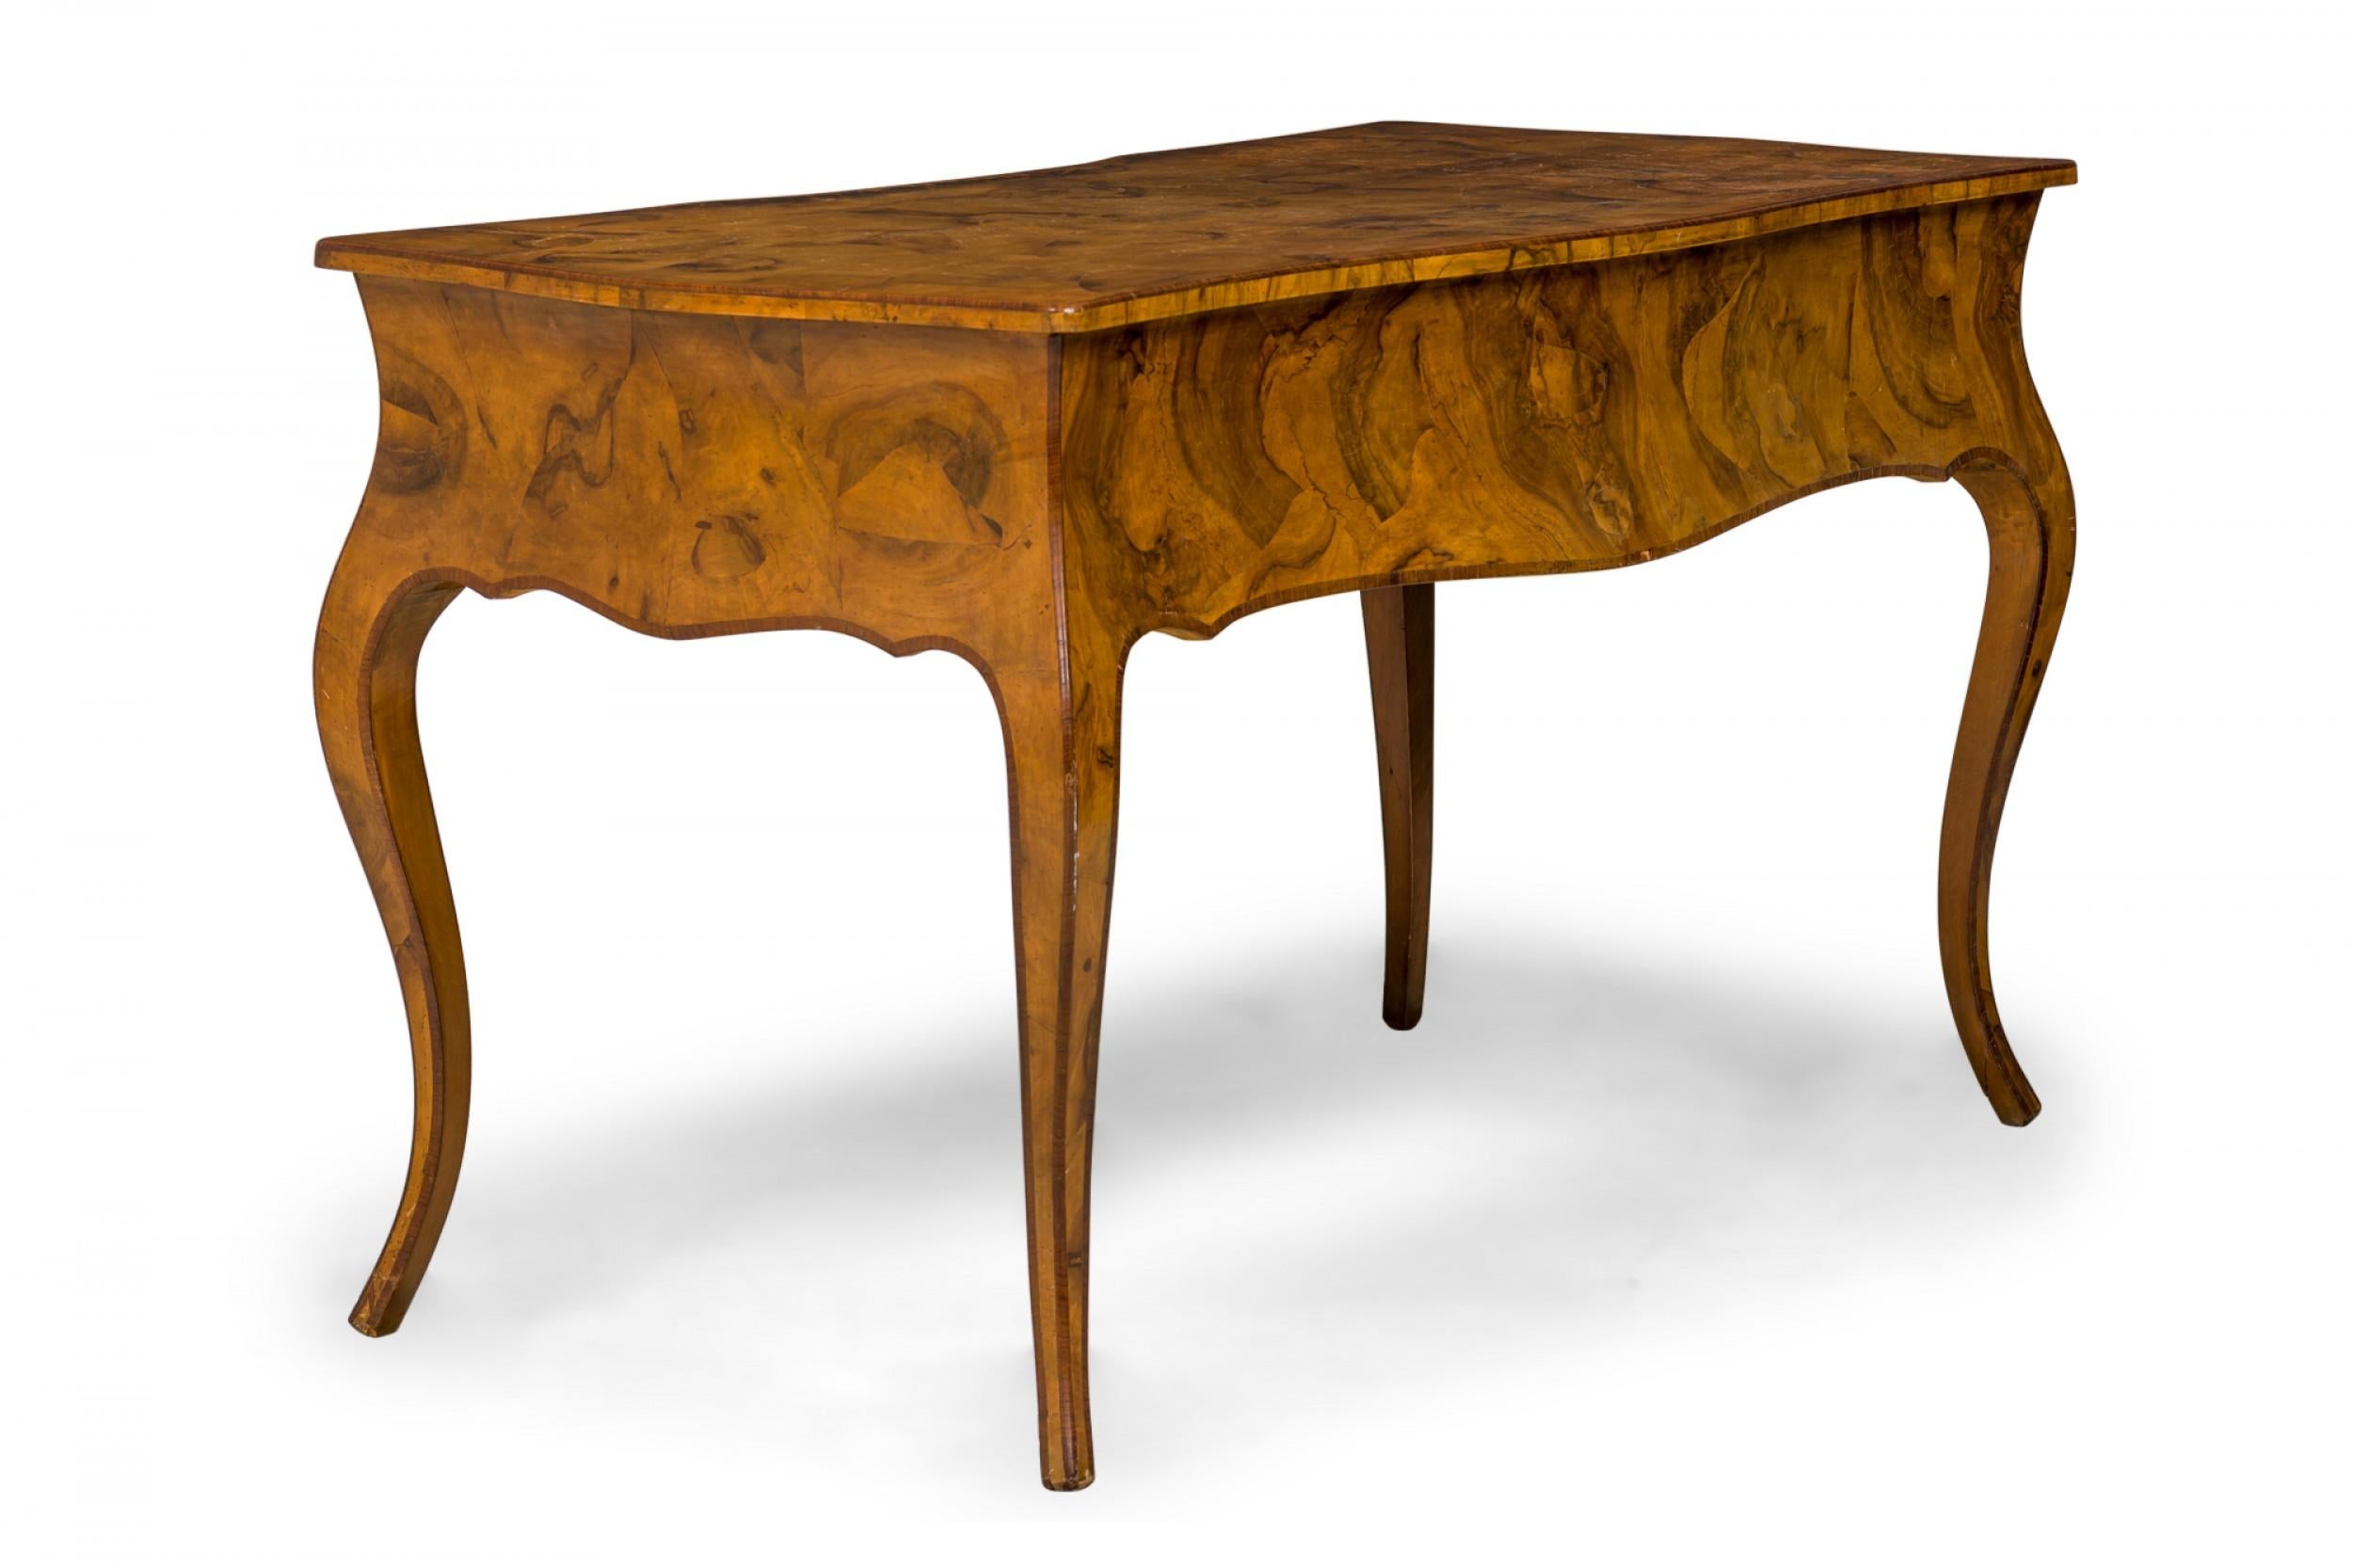 20th Century French Louis XV-Style Patchwork Burlwood Veneer Desk For Sale